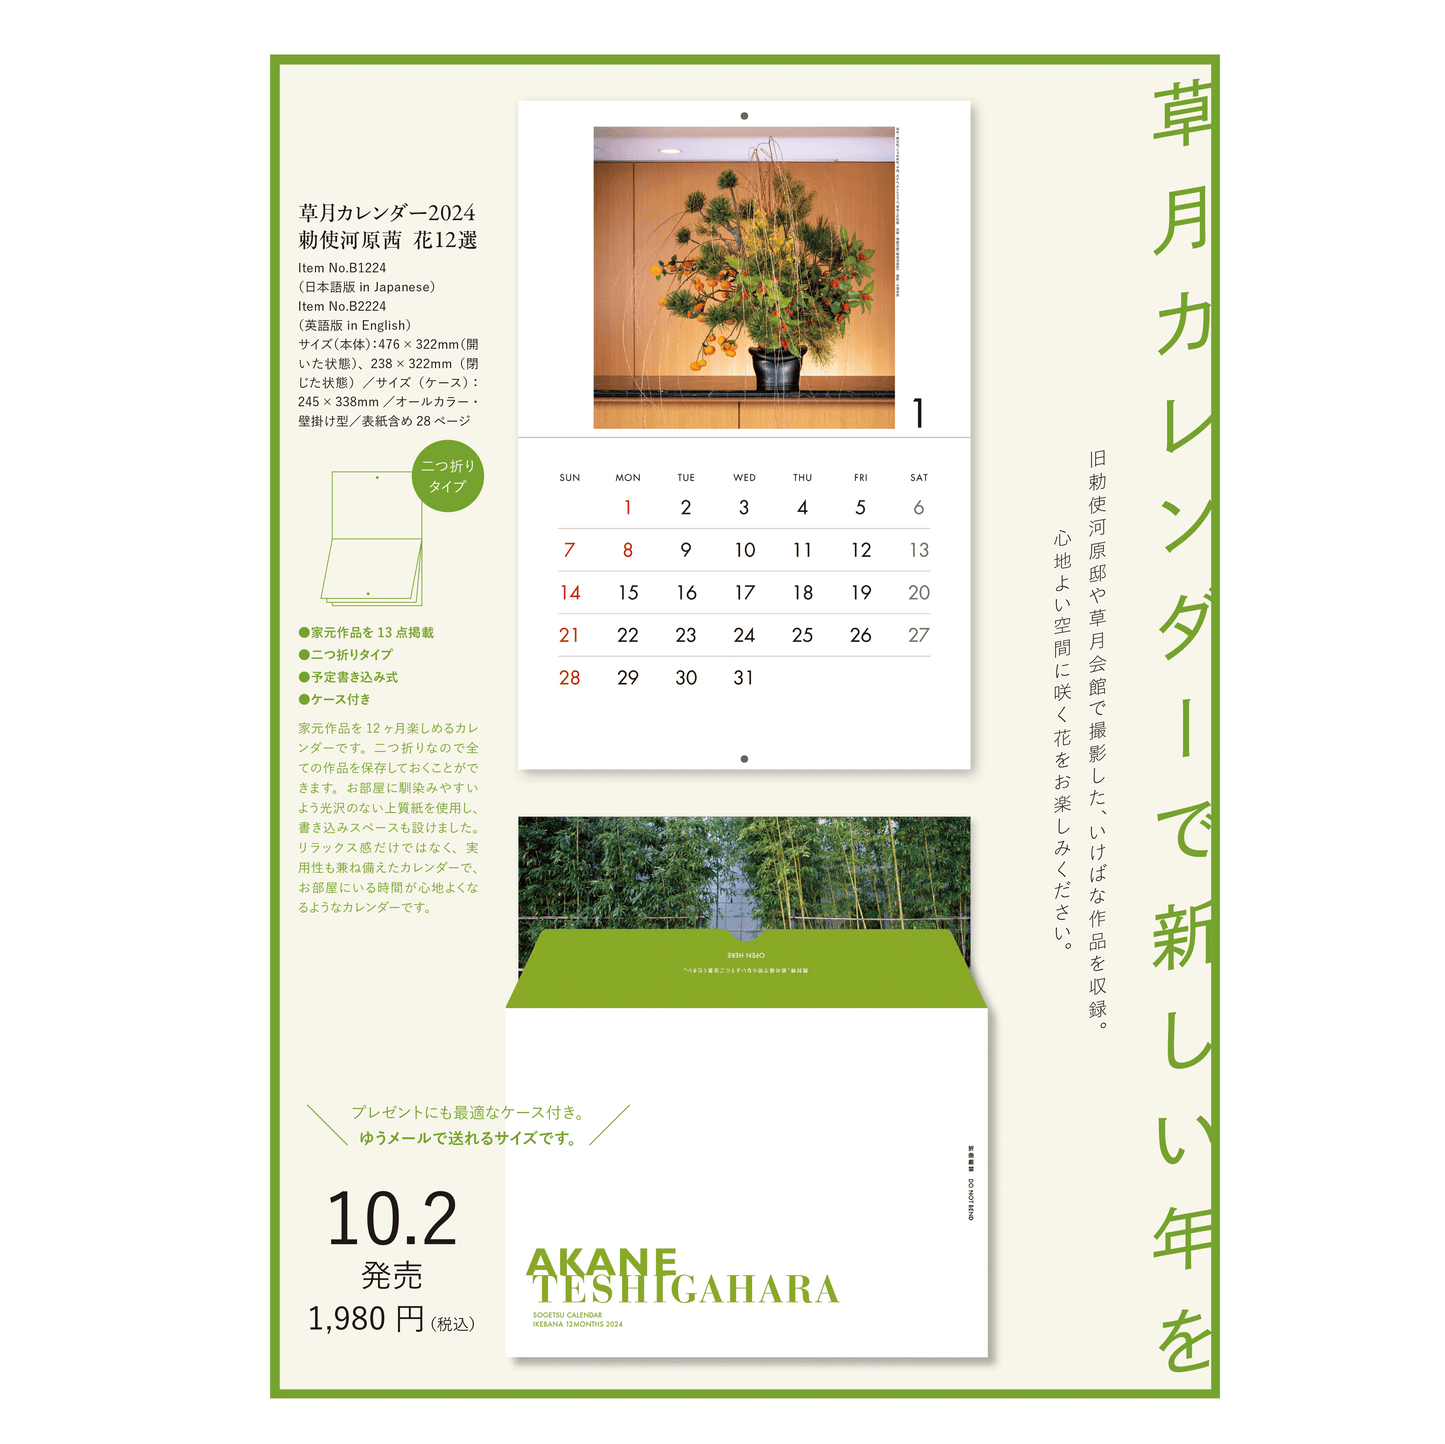 Sogetsu Calendar 2024 “12 Teshigahara Akane Flowers”